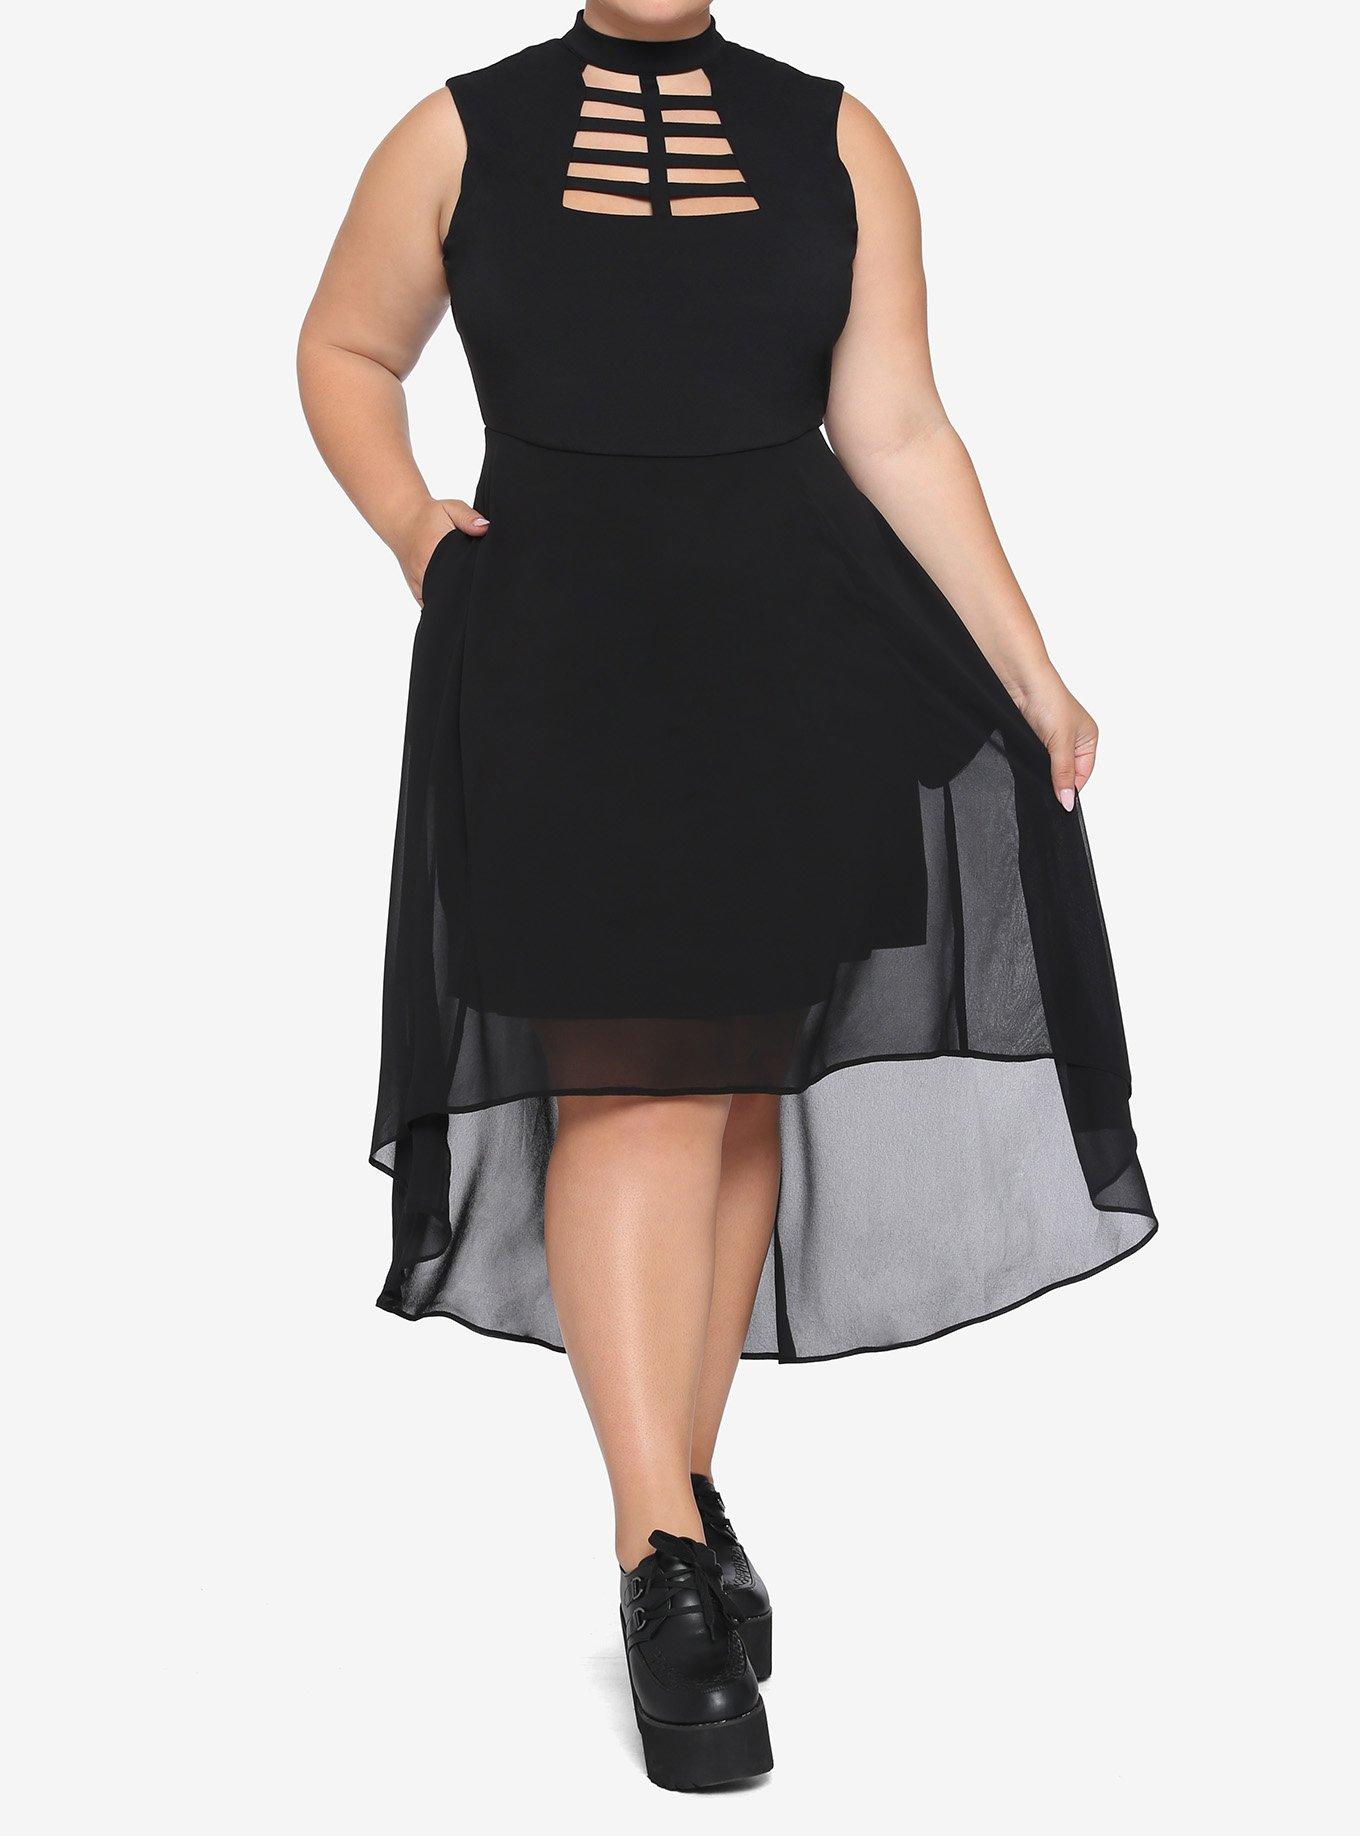 Black Caged Front Hi-Low Dress Plus Size, BLACK, alternate